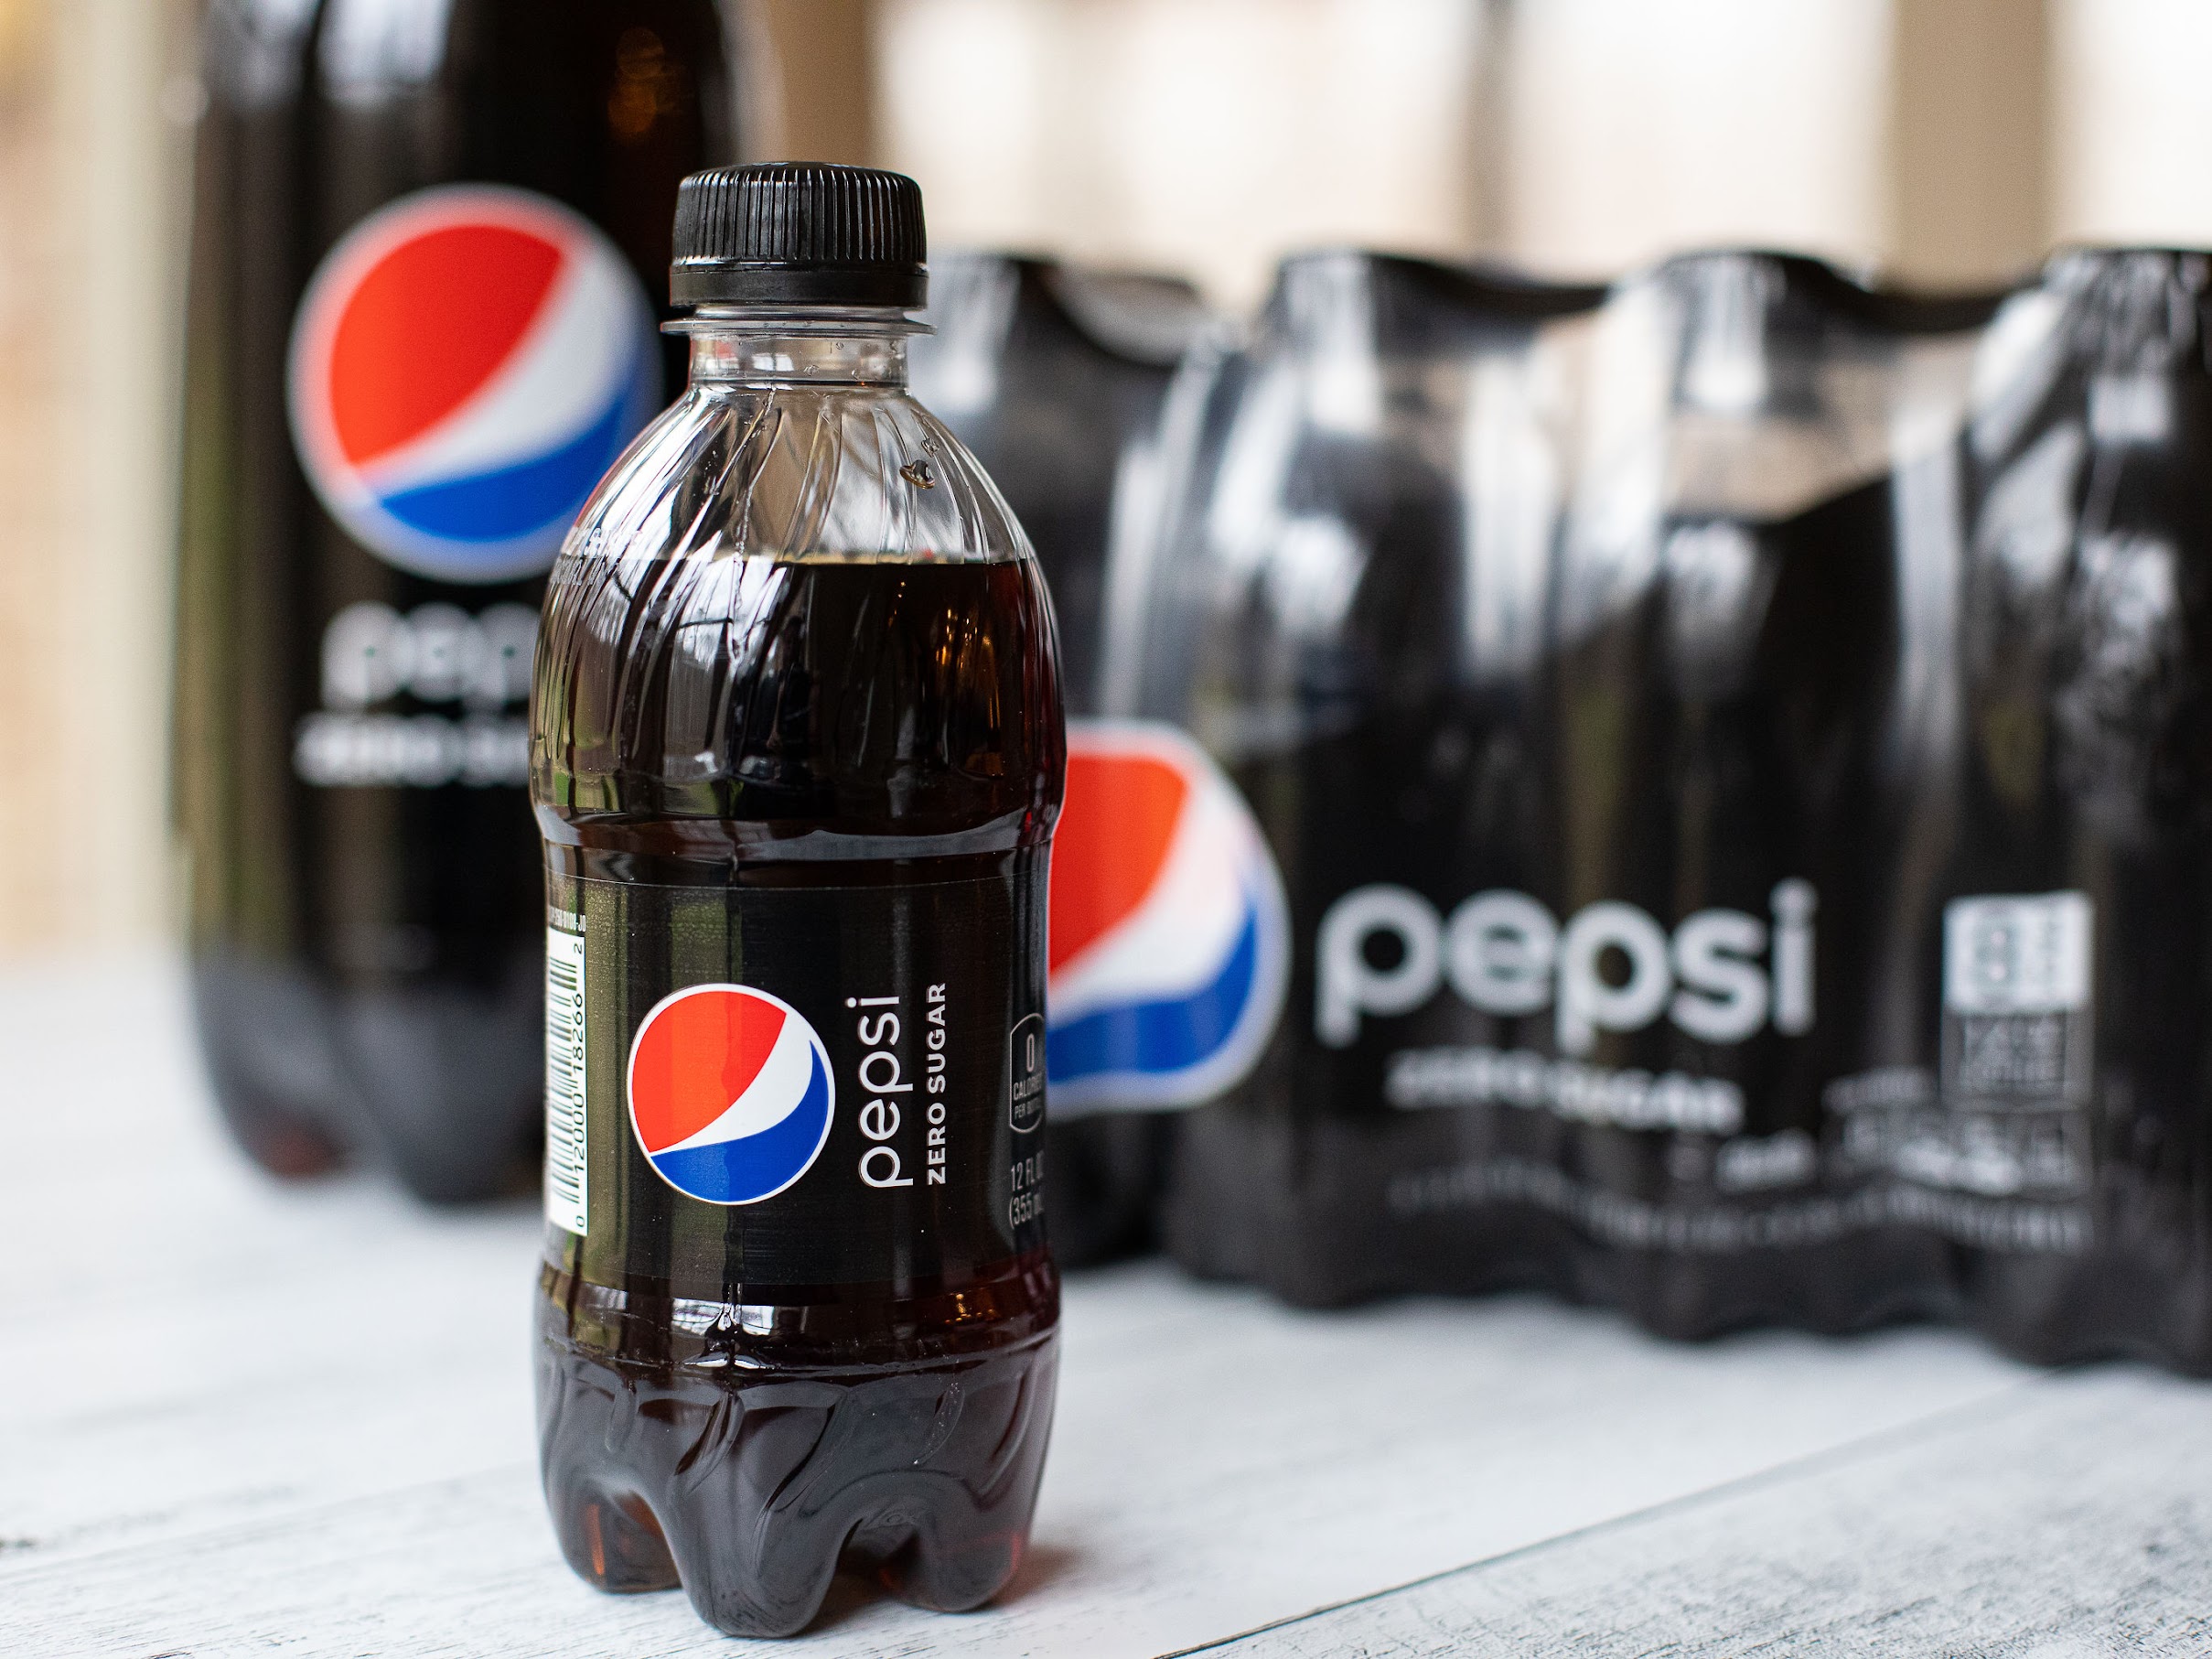 Pepsi Coupon For The Publix BOGO Sale – Get 6-Pack or 8-Pack Bottles For Just $2.50